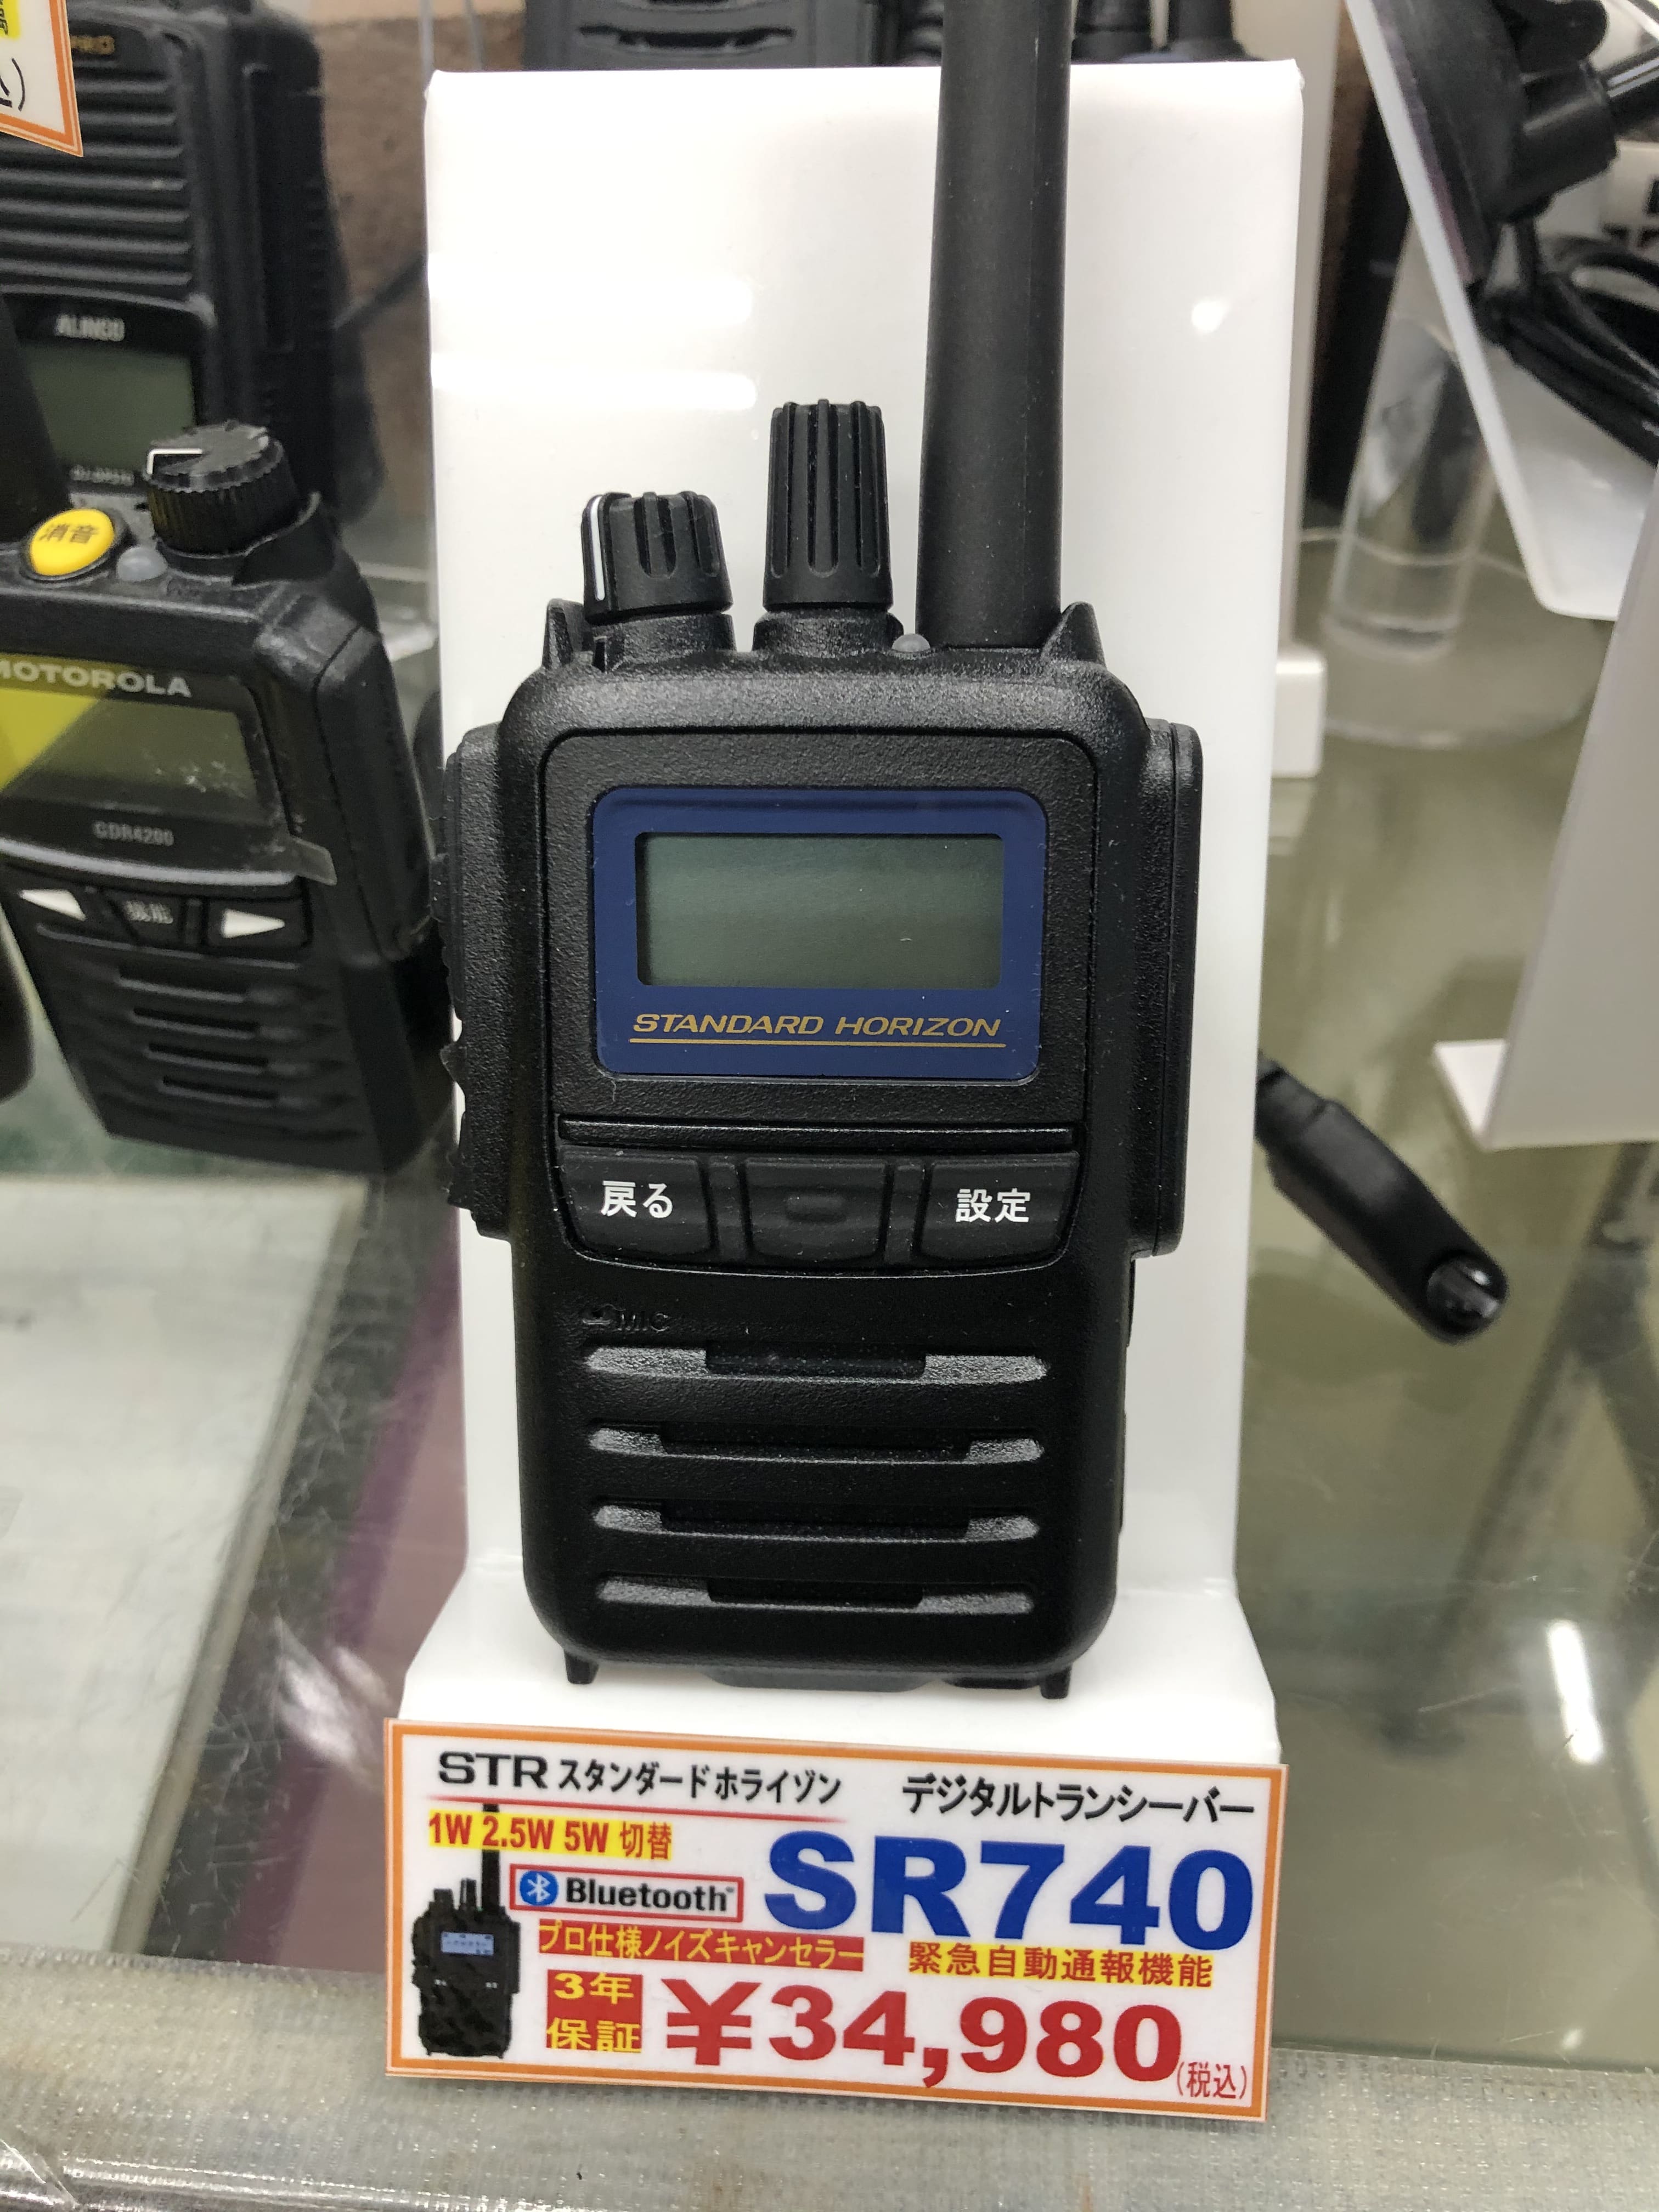 SALE／86%OFF】 携帯型デジタルトランシーバーSR740 本体 Bluetooth対応 SR740 八重洲無線